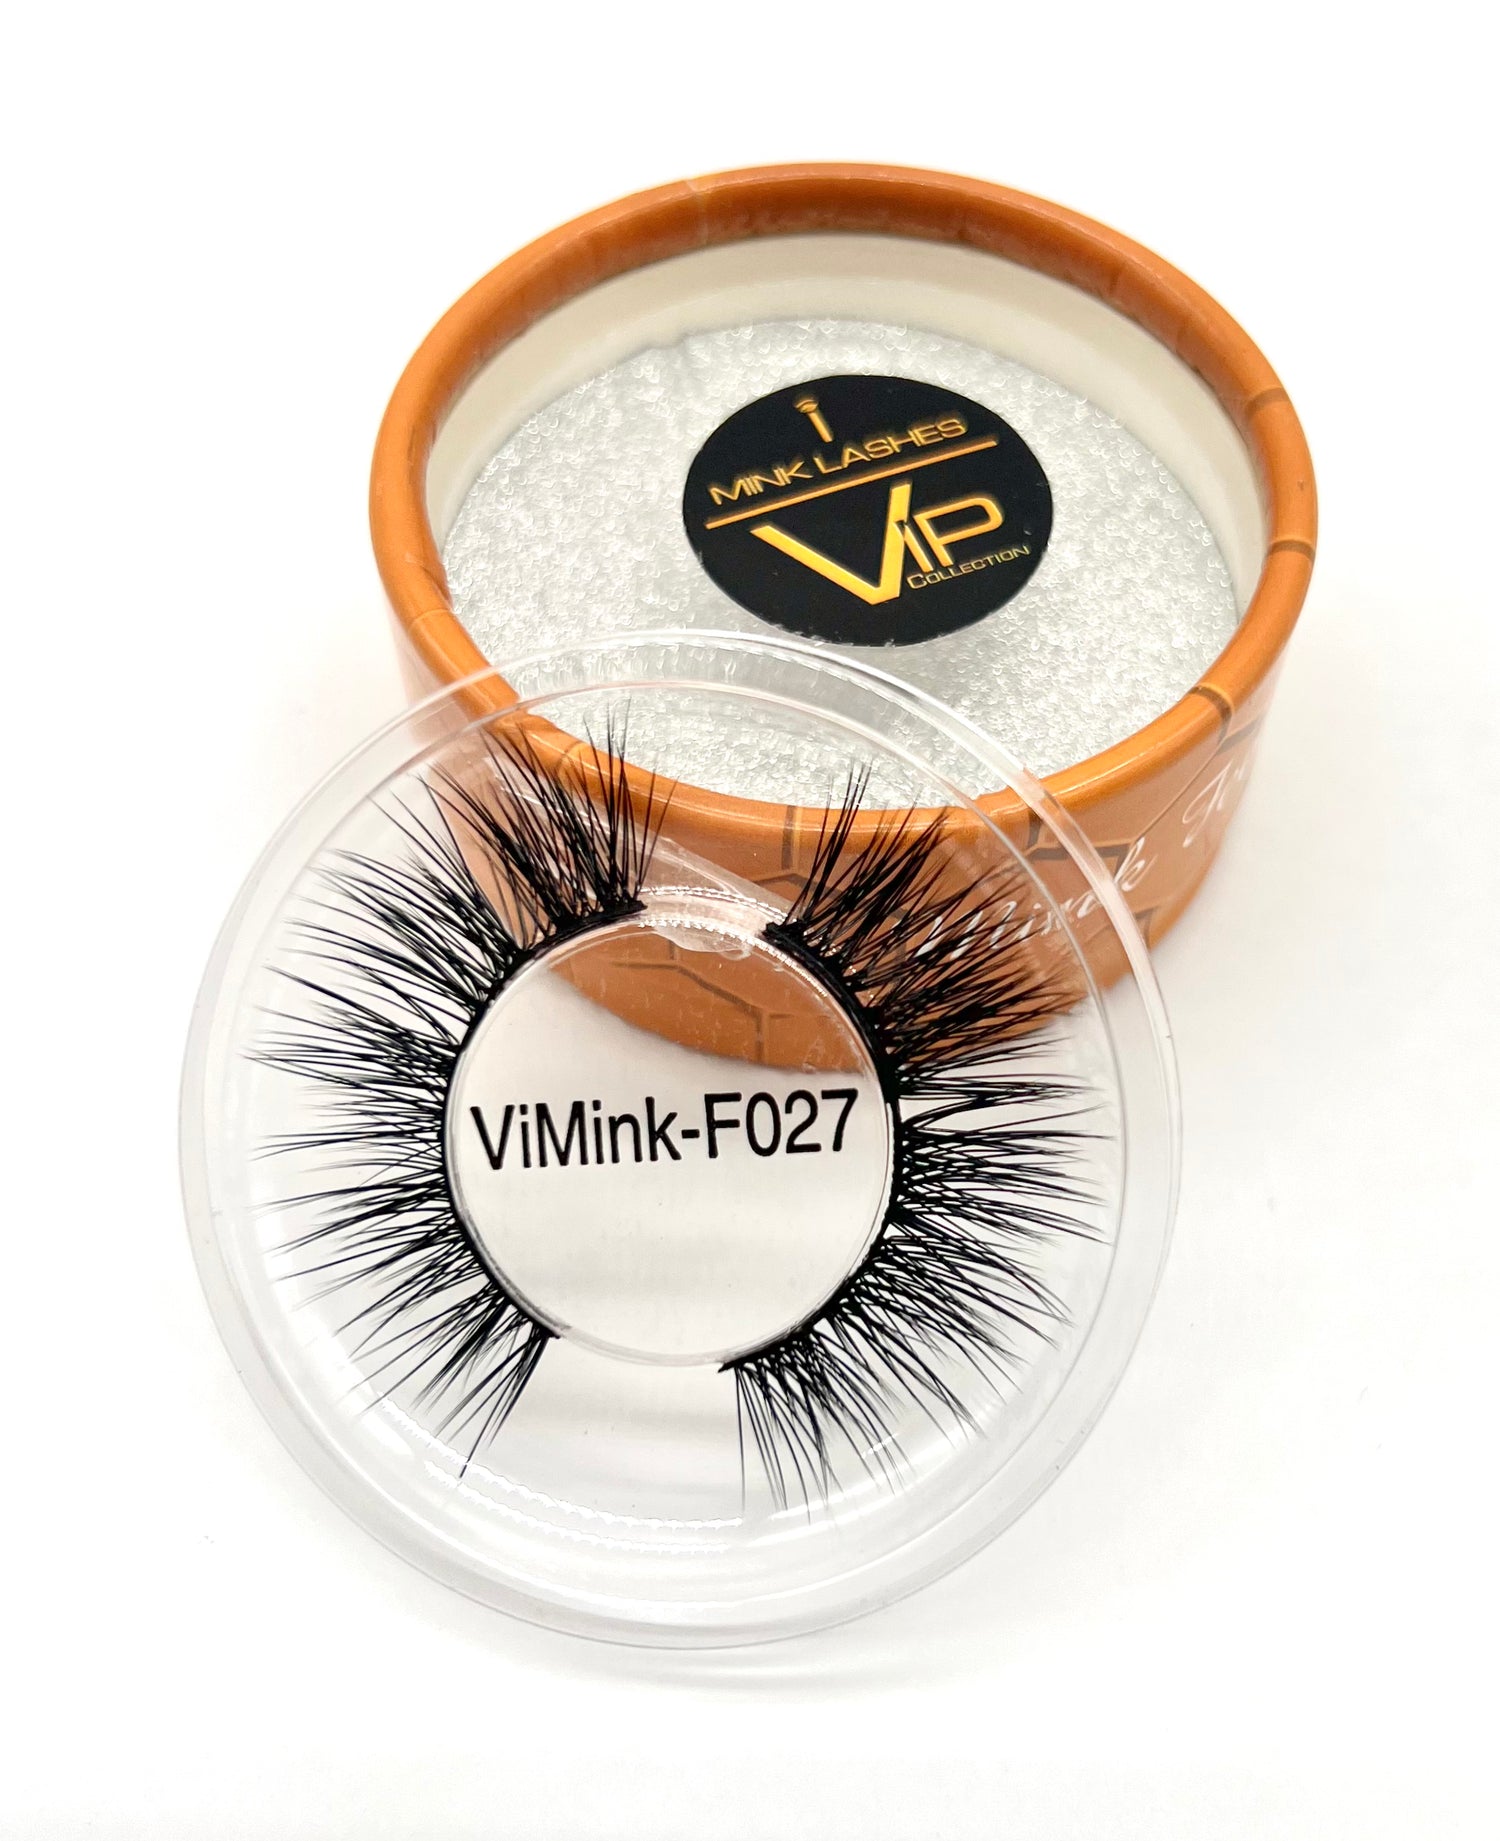 VIP iMink Super Flat Strip Lashes - 98% Mink Feel - Animal Free - VIP Extensions